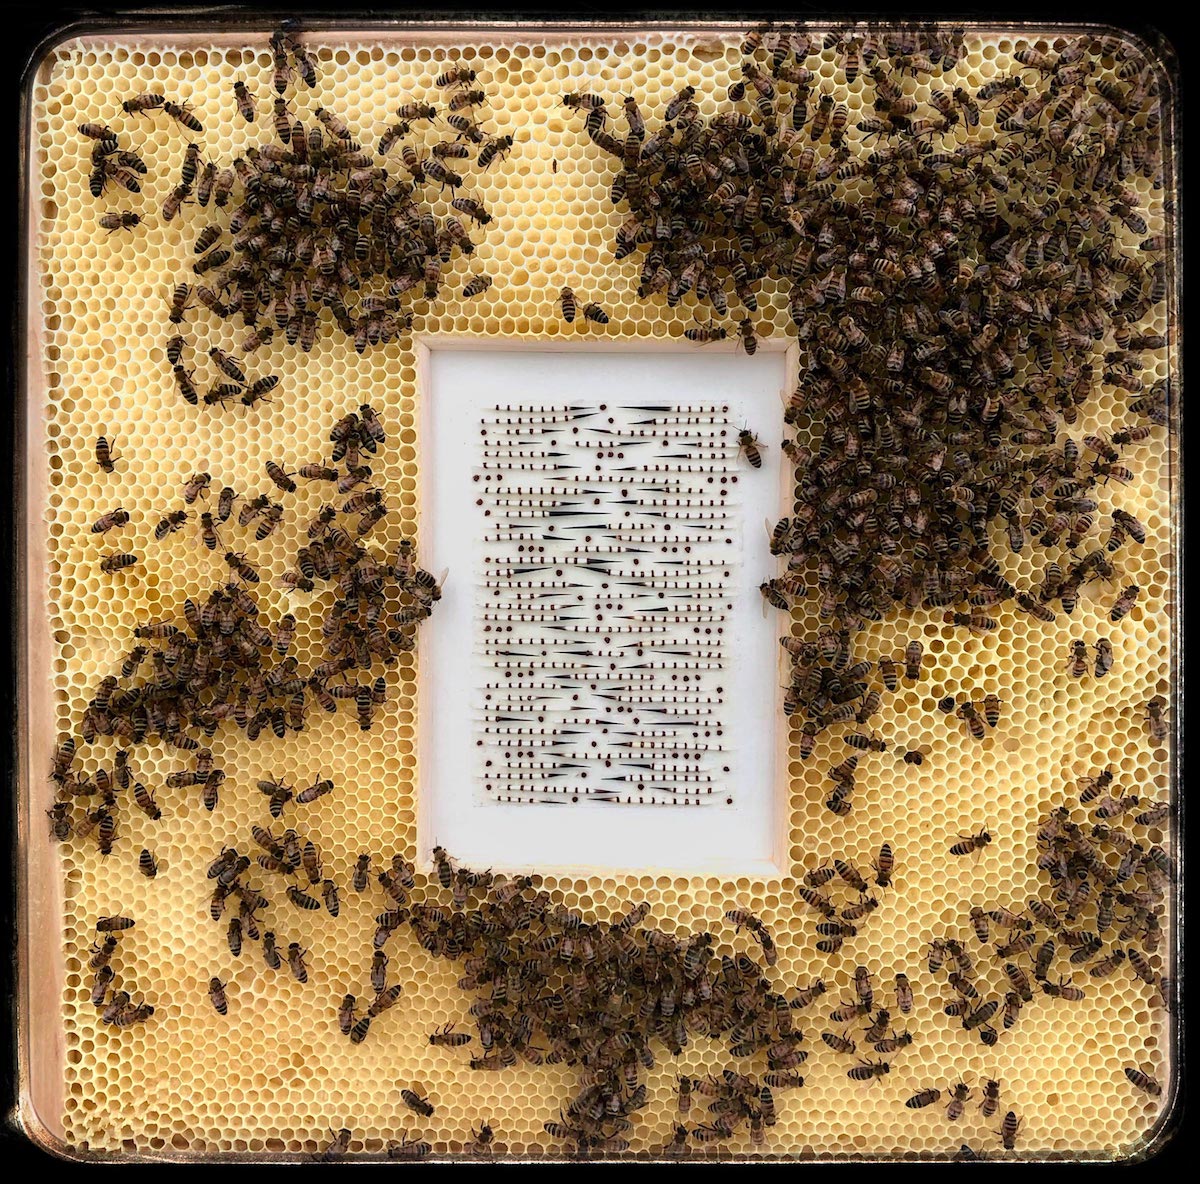 Multimedia honeycomb by Ava Roth